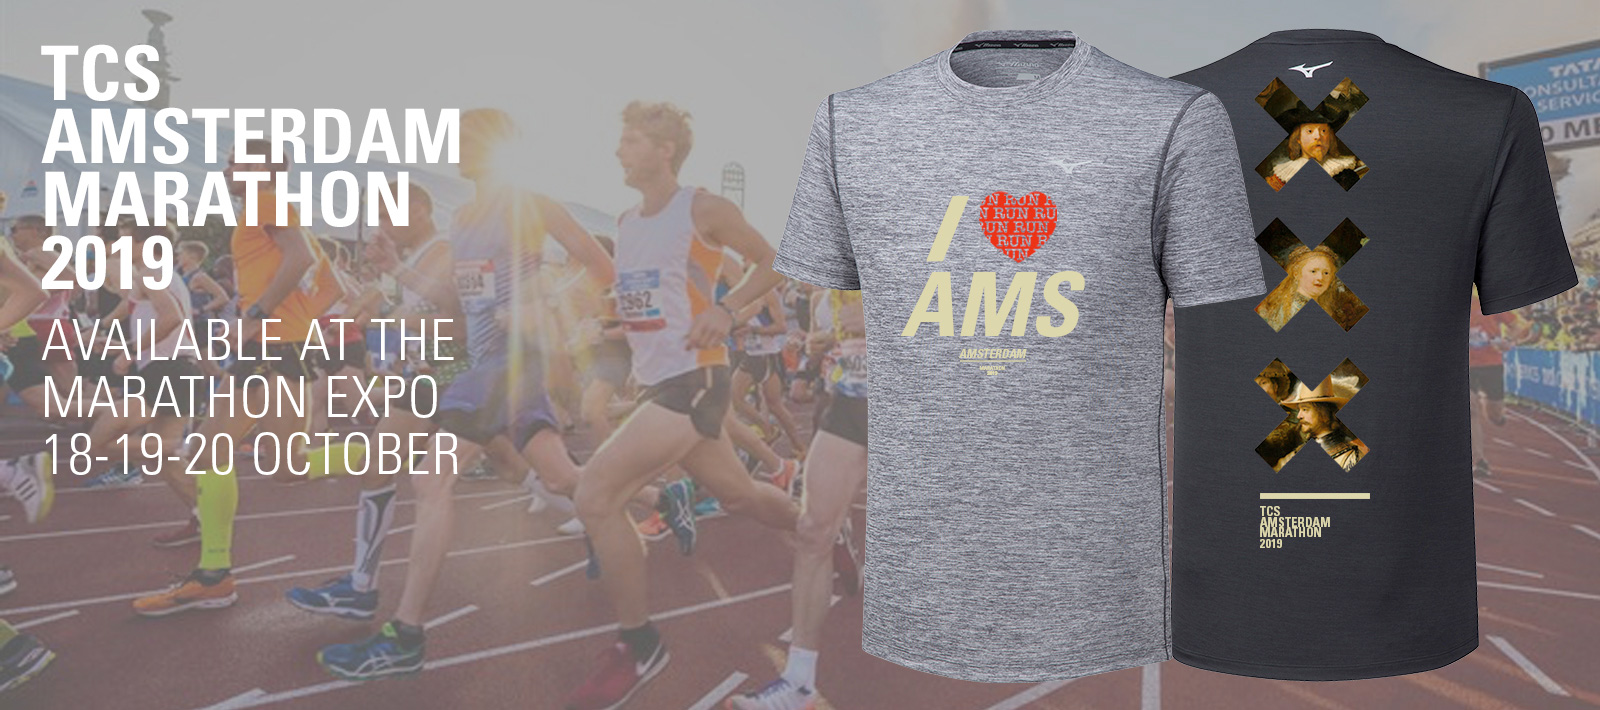 TCS Amsterdam marathon 2019